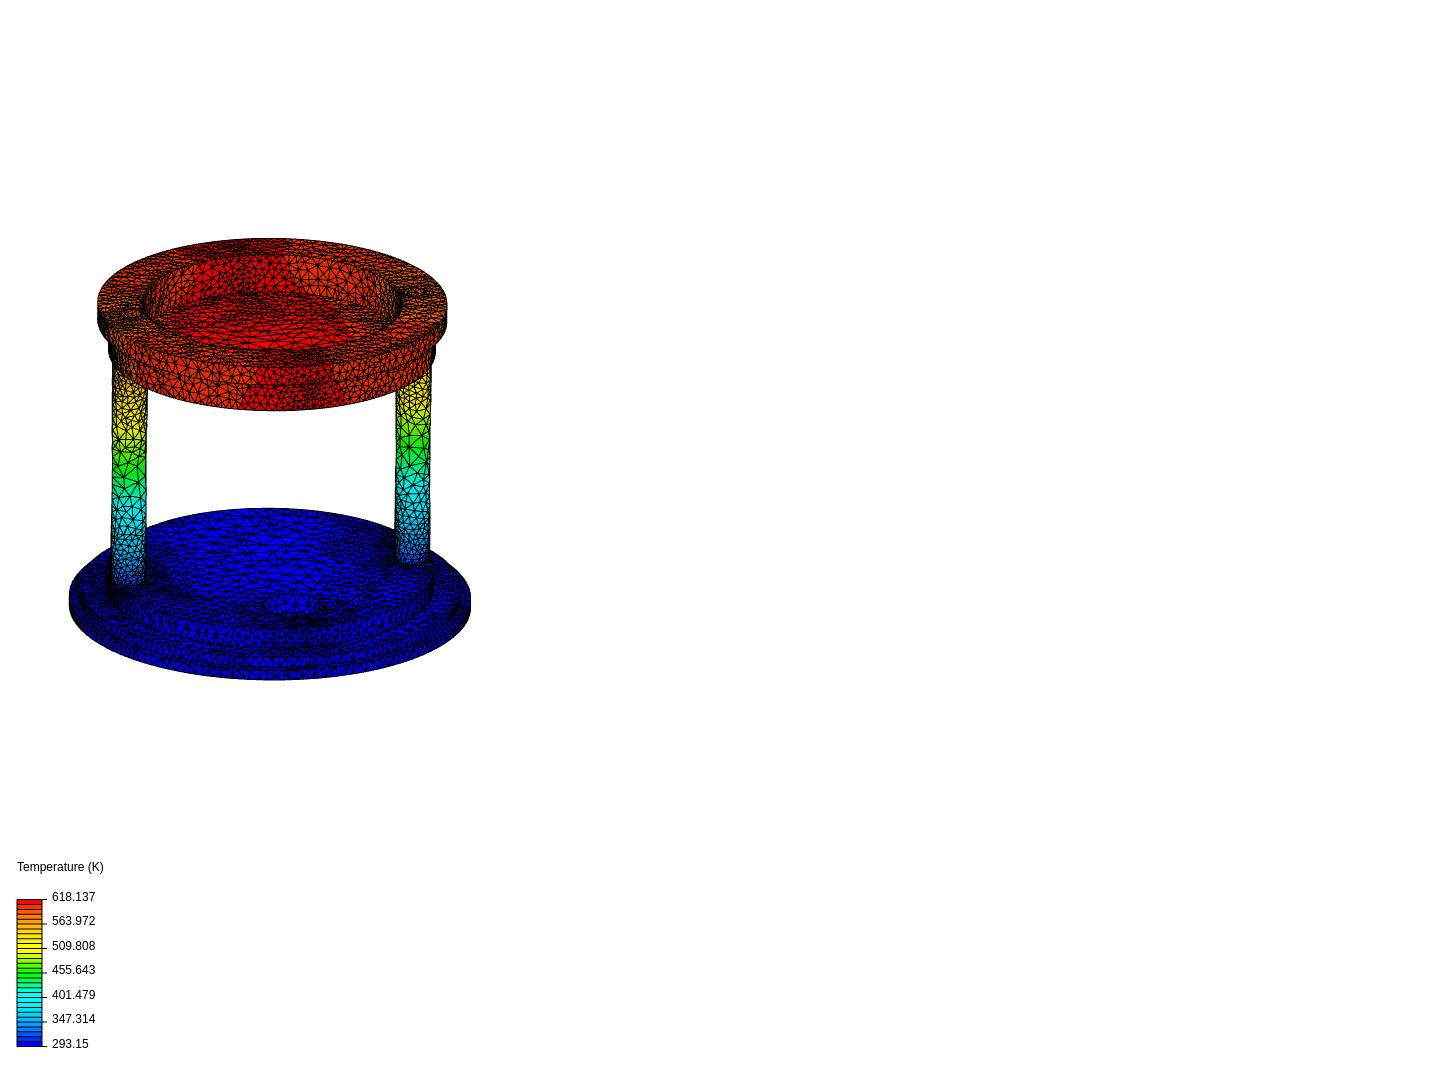 LED Thermal study image